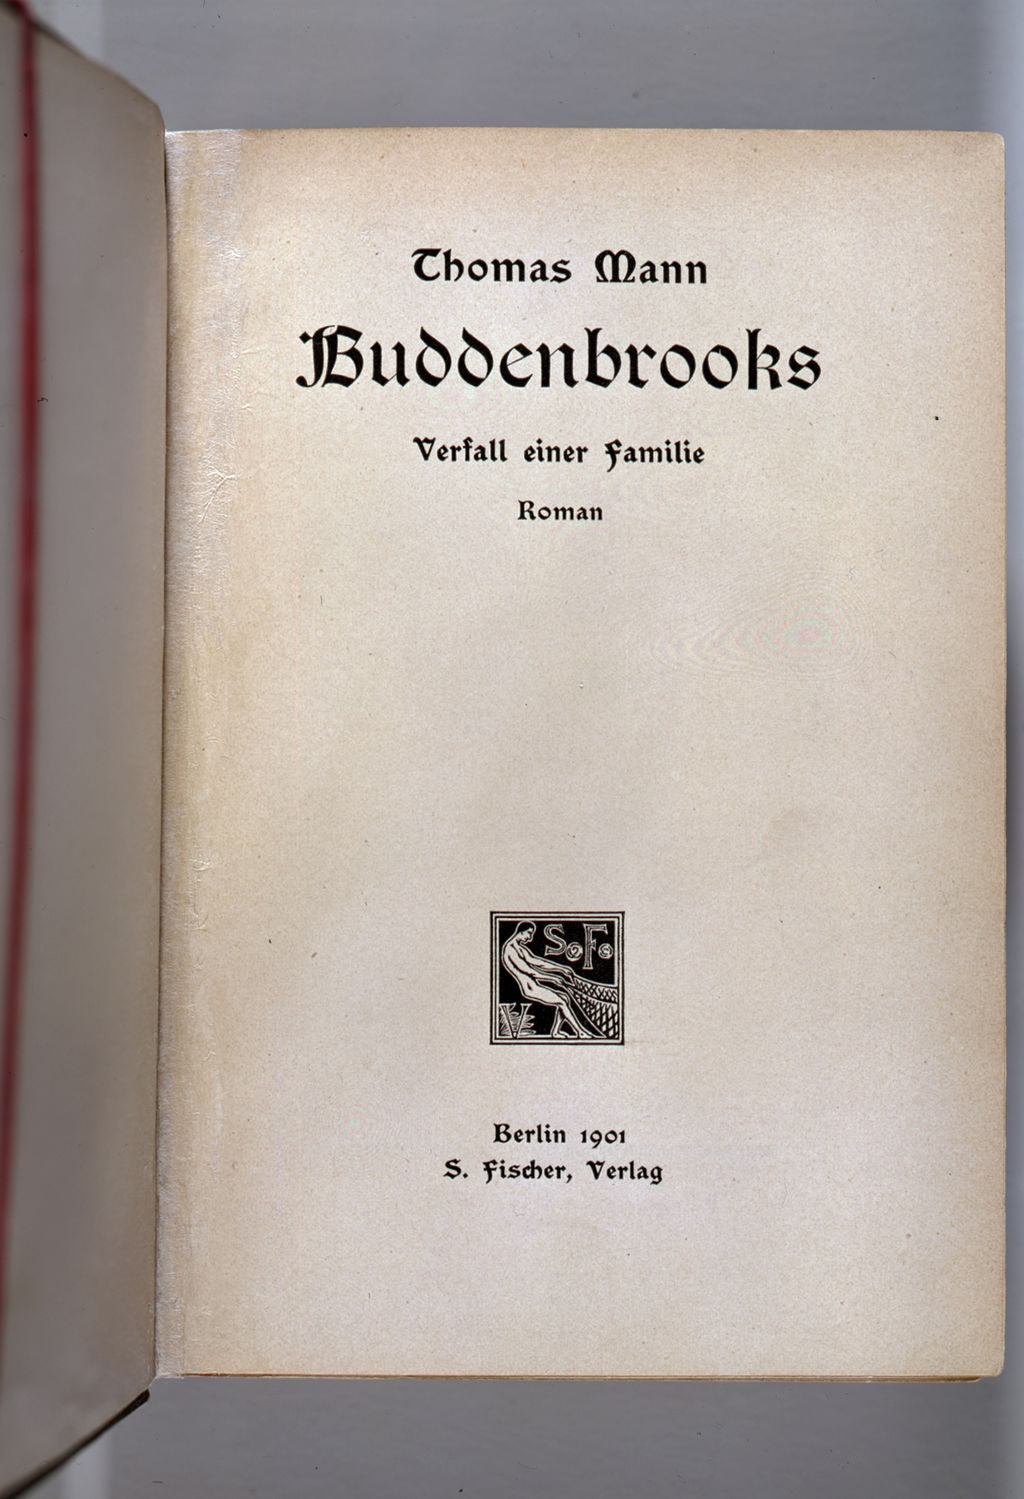 Buch: Thomas Mann, "Buddenbrooks. Verfall einer Familie", 1901